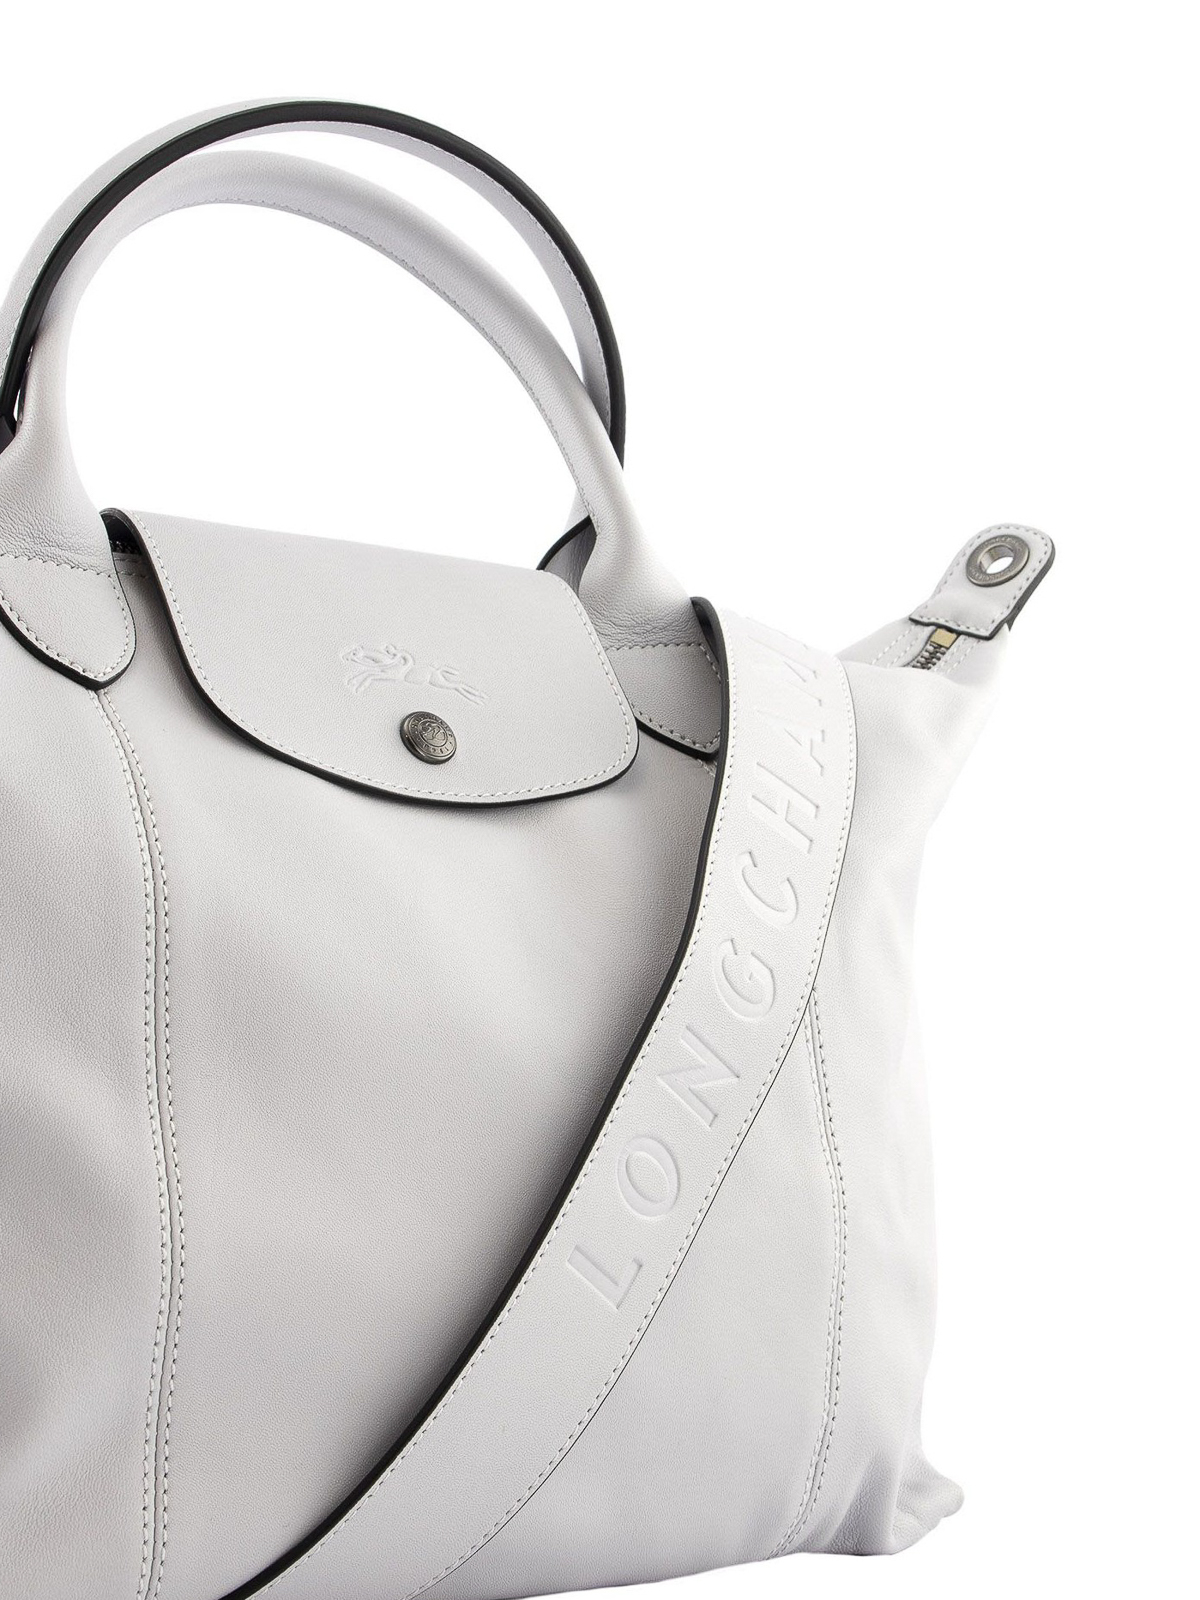 Longchamp Le Pliage Cuir Small Top Handle Bag on SALE